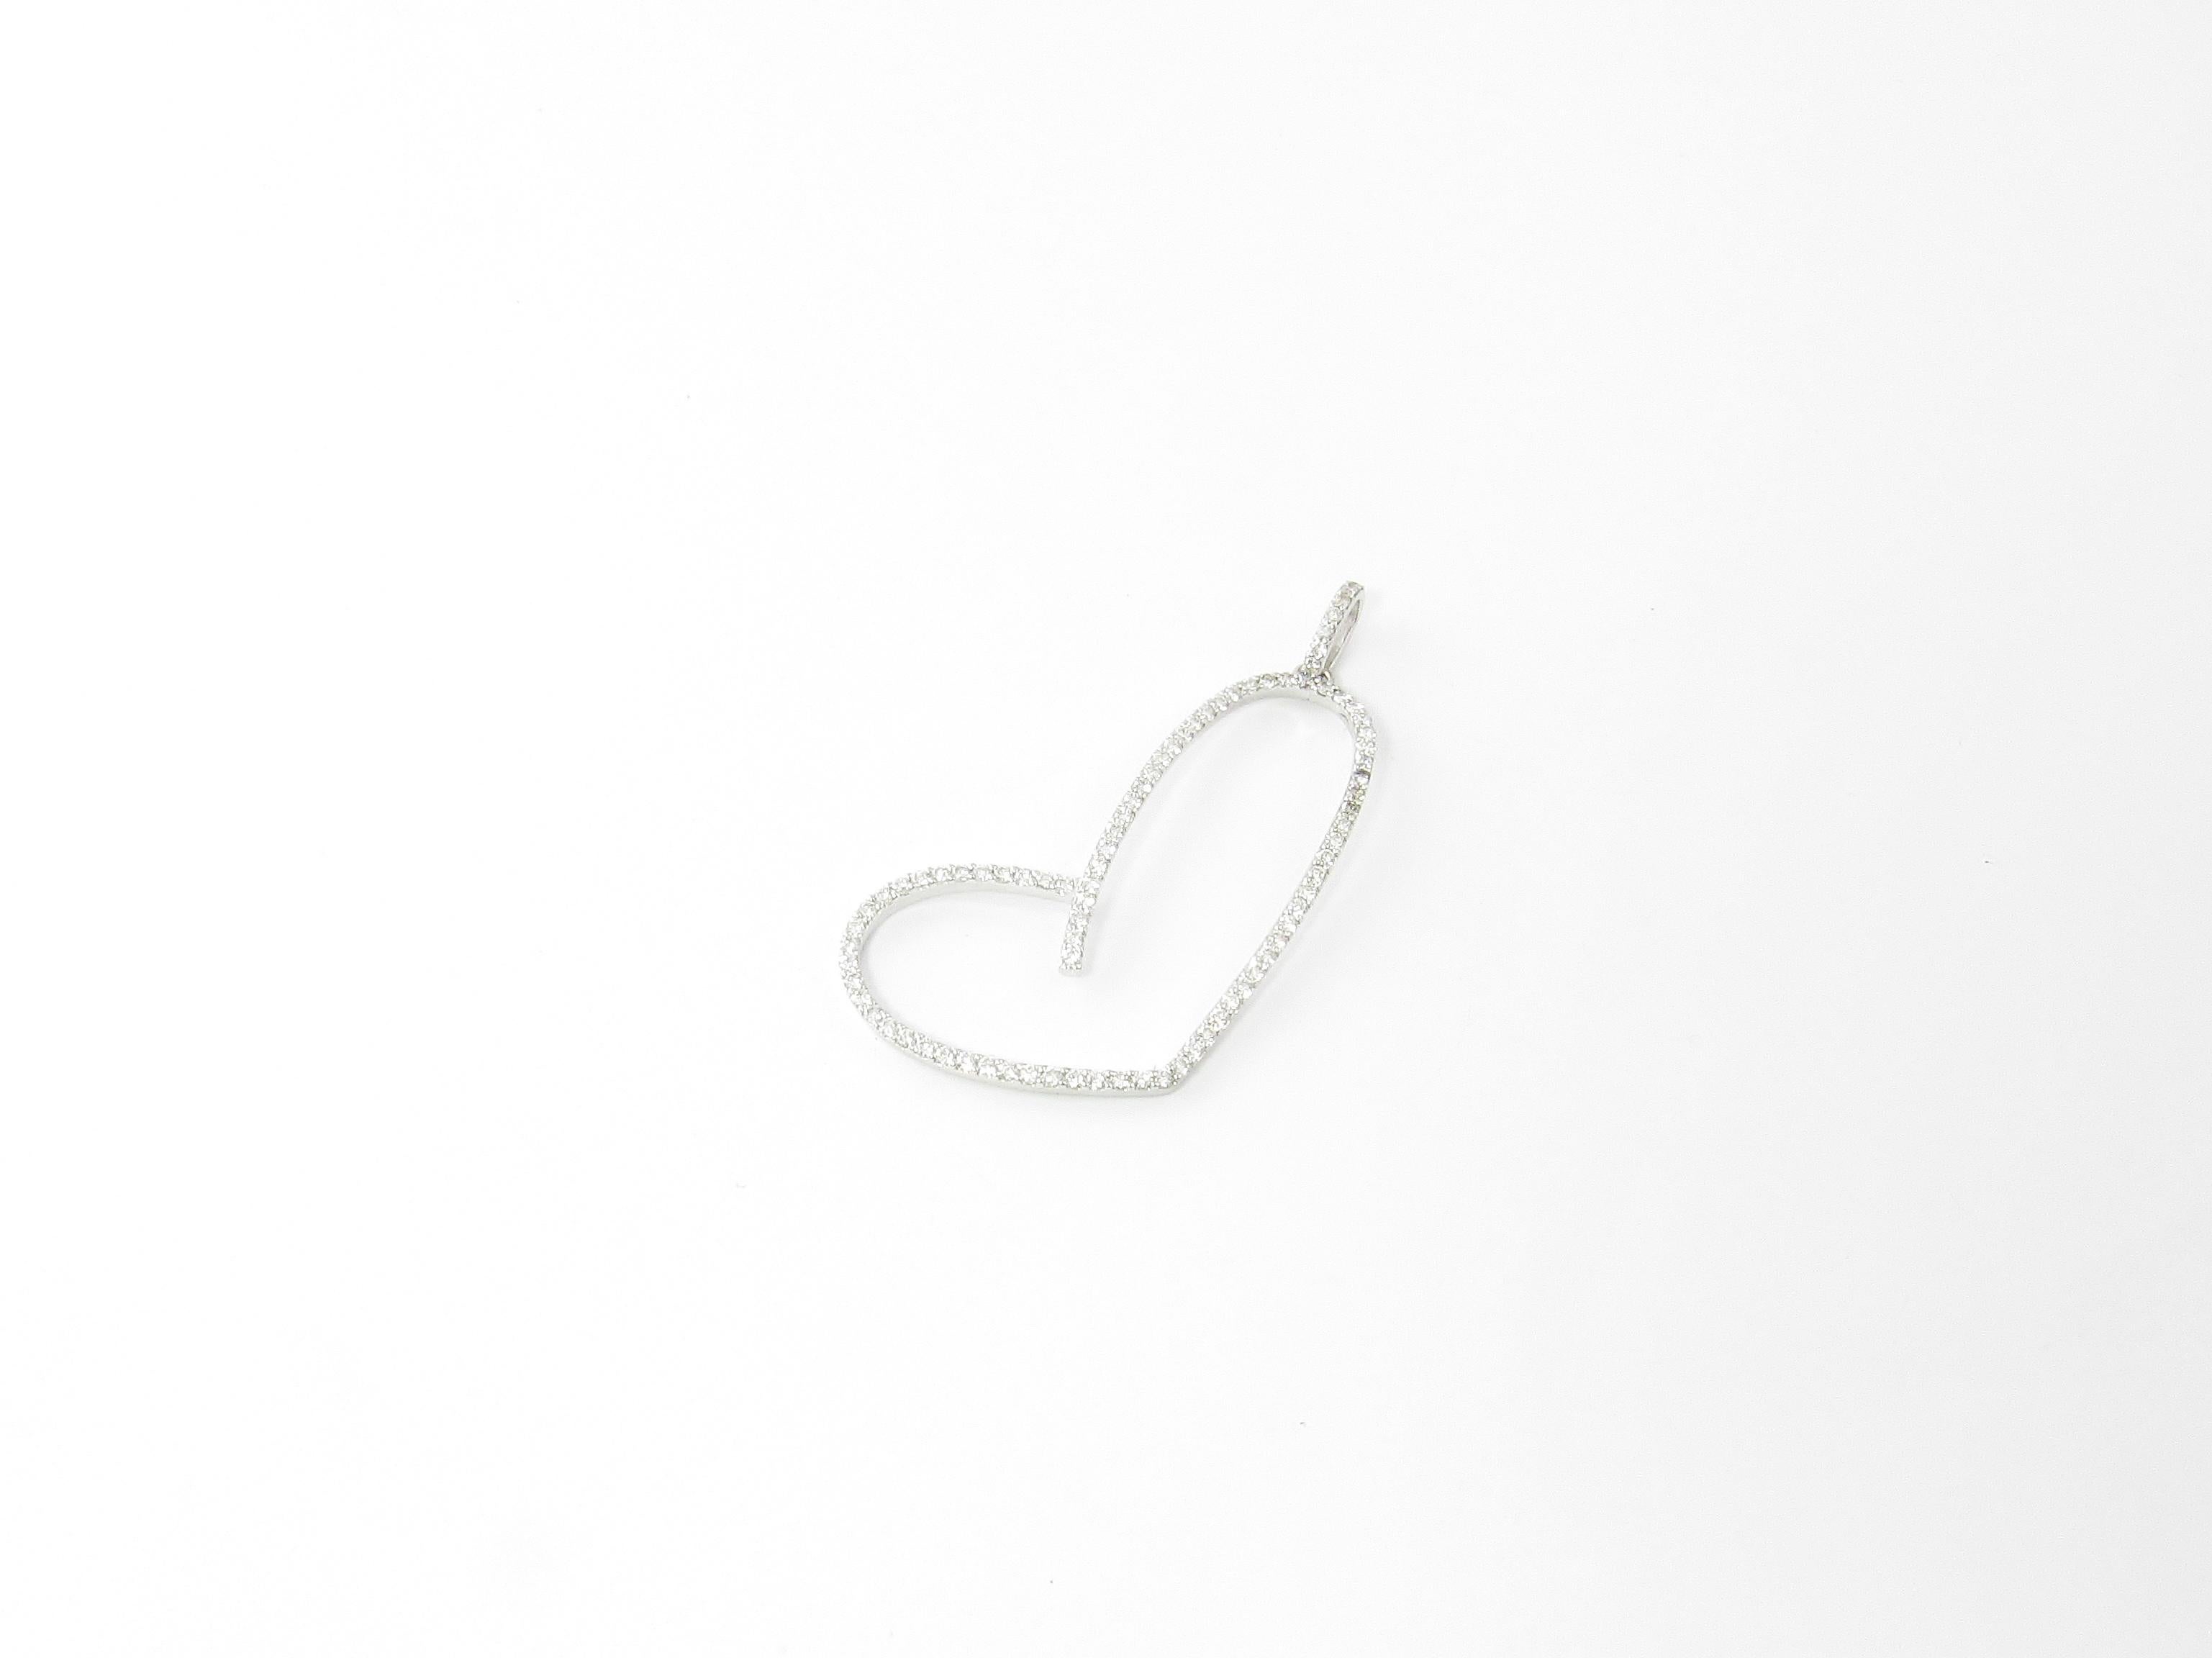 Vintage 14 Karat White Gold Diamond Heart Pendant

This stunning open heart pendant features 80 round brilliant cut diamond set in classic 14K white gold.

Approximate total diamond weight: .90 ct.

Diamond color: G

Diamond clarity: VS2

Size: 44